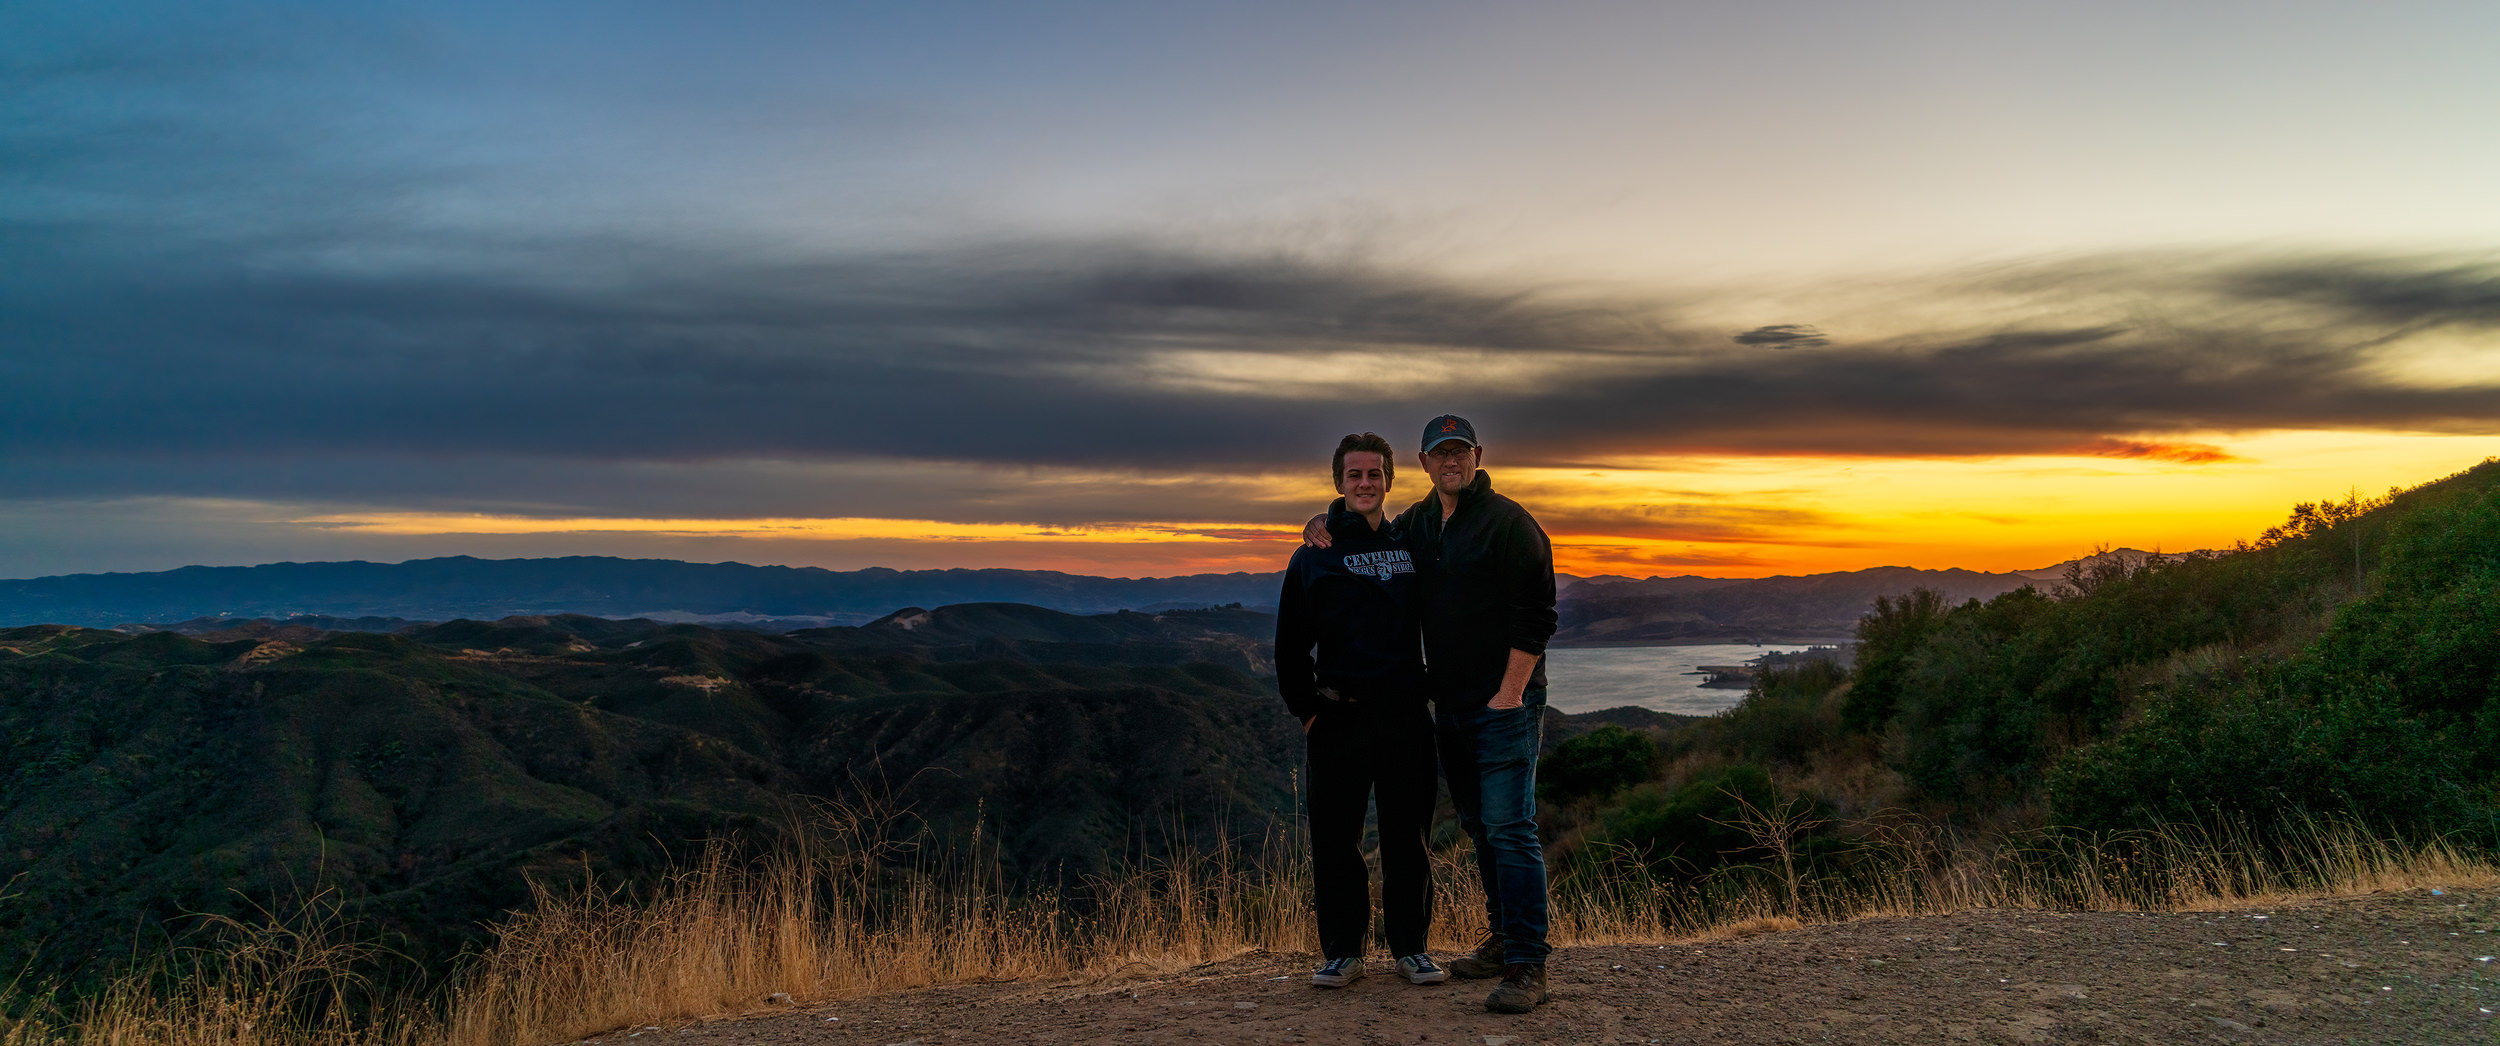 Isaiah Turner and Jeff Turner at castaic lake at sunset